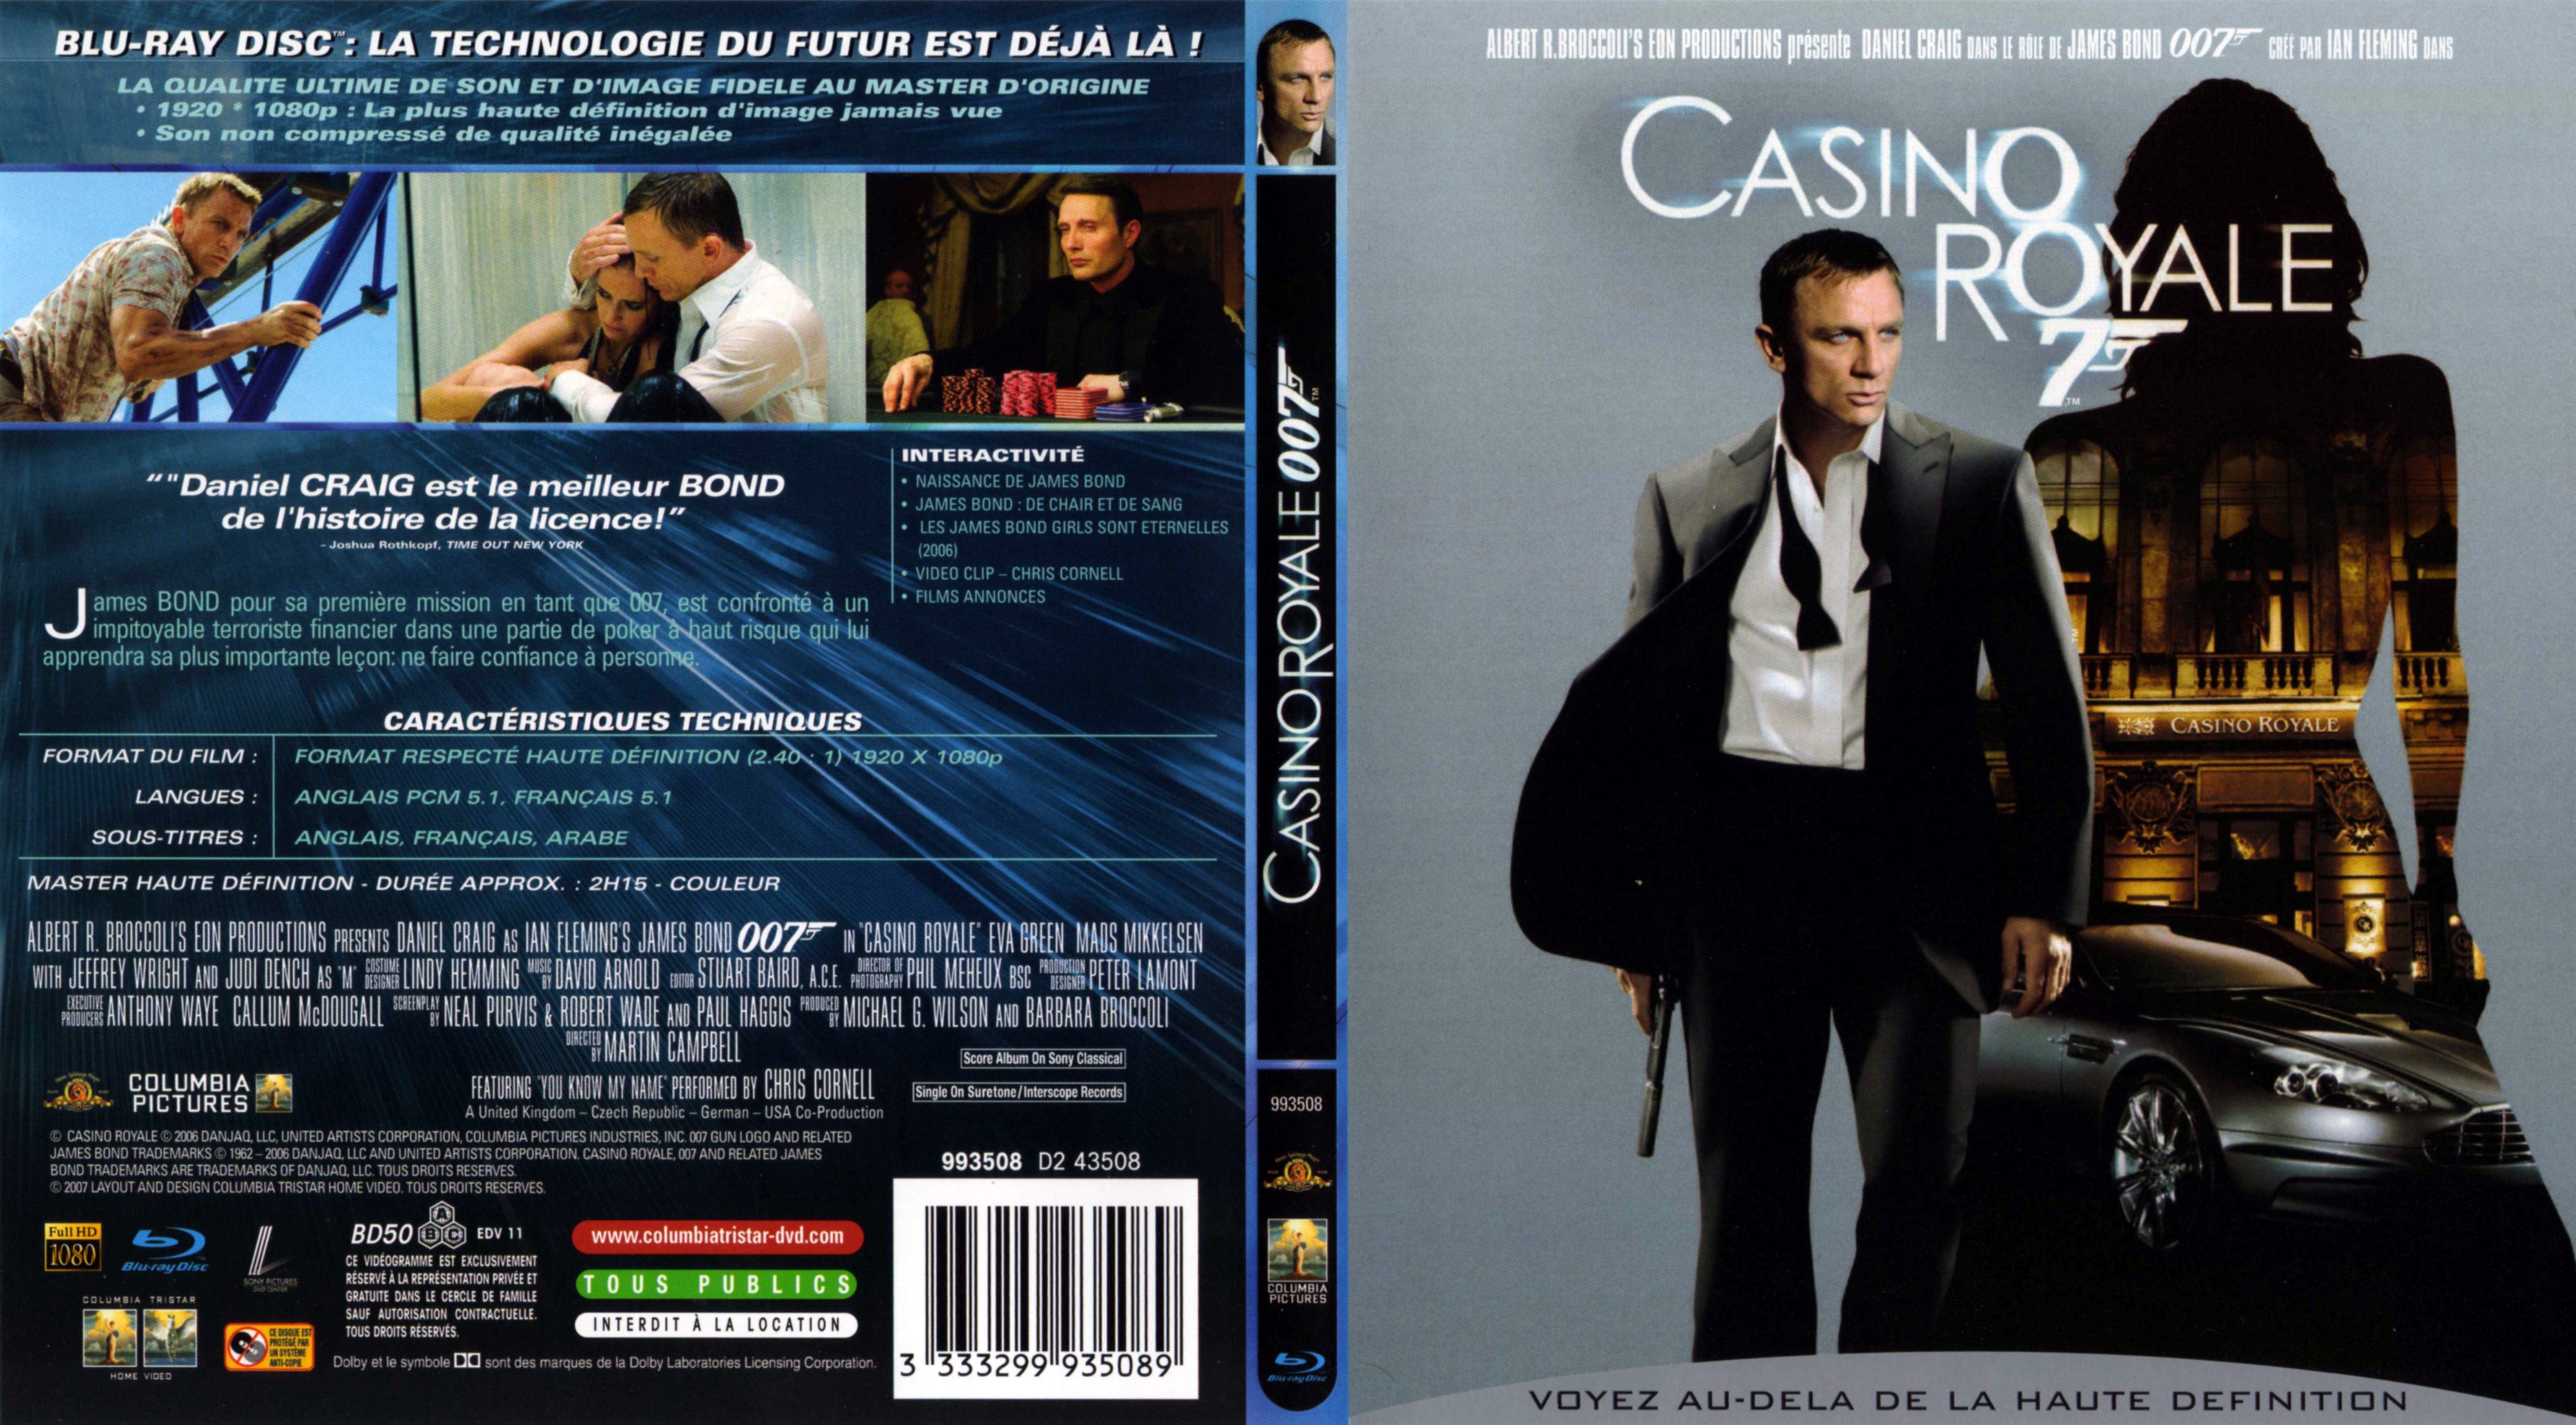 007 casino royale free onlinw